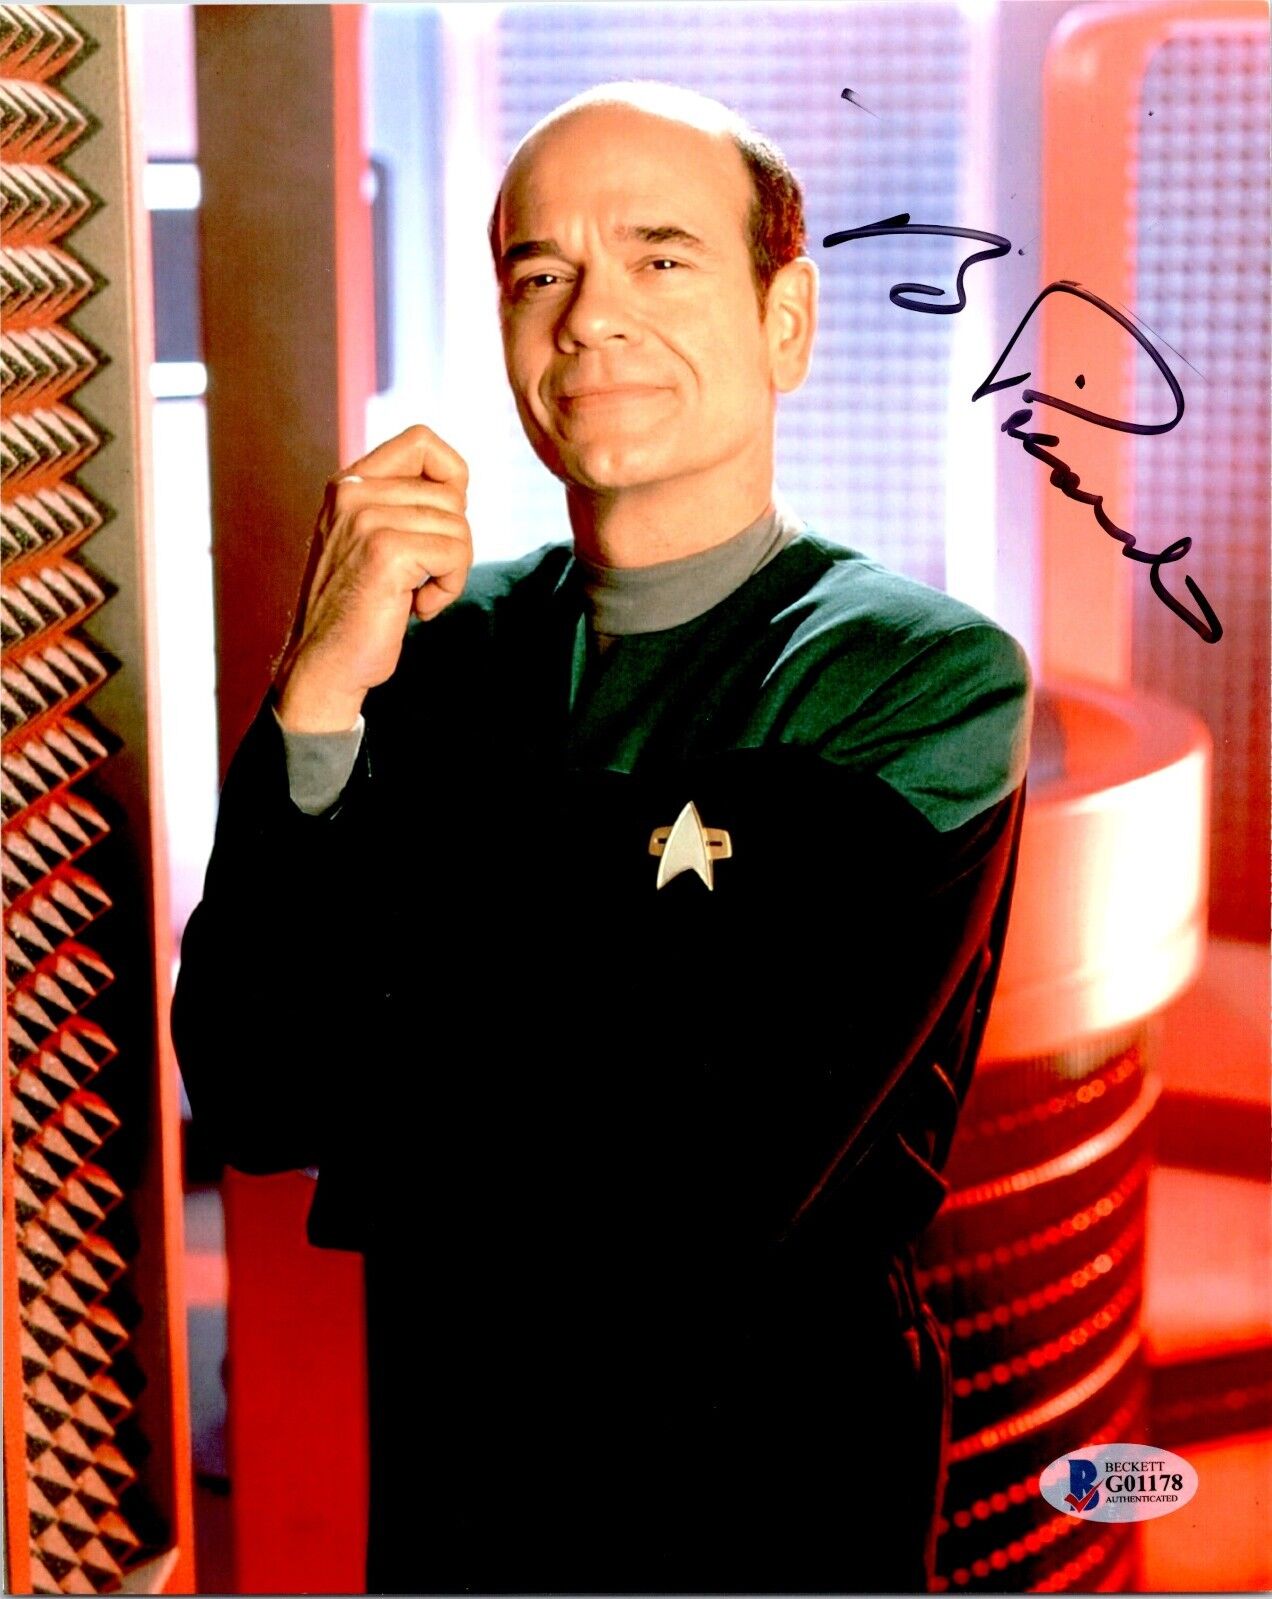 Robert Picardo 'Star Trek' Autographed 8x10 Photo Beckett Authentication